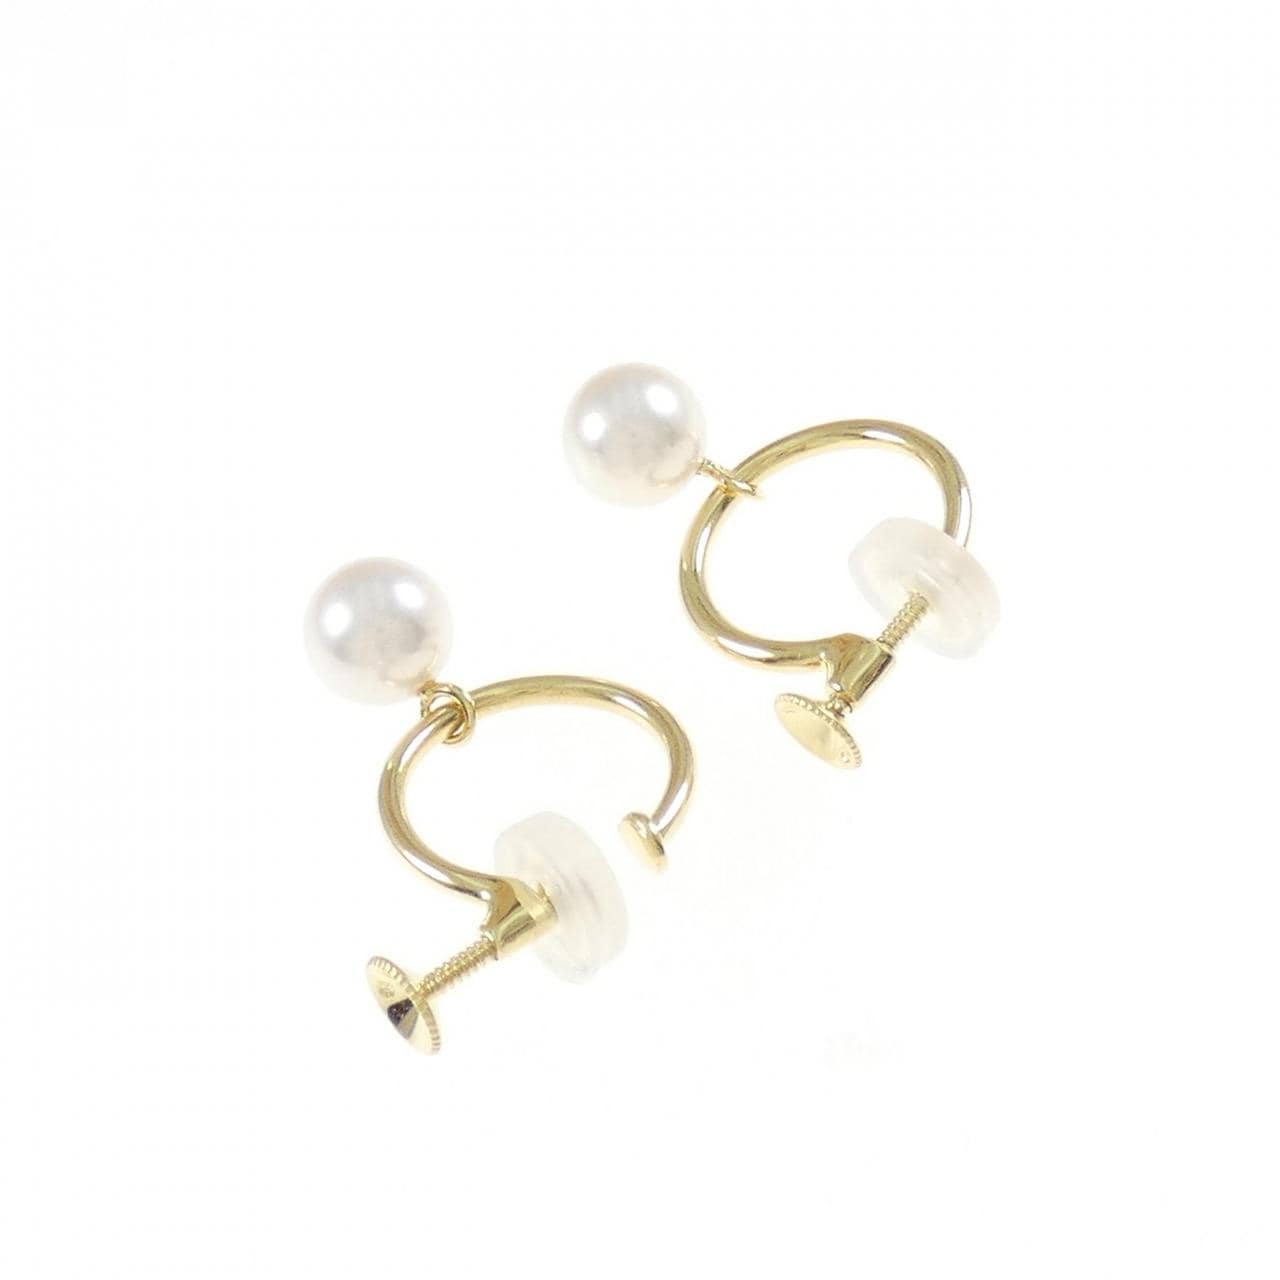 MIKIMOTO Akoya pearl earrings 7.1mm